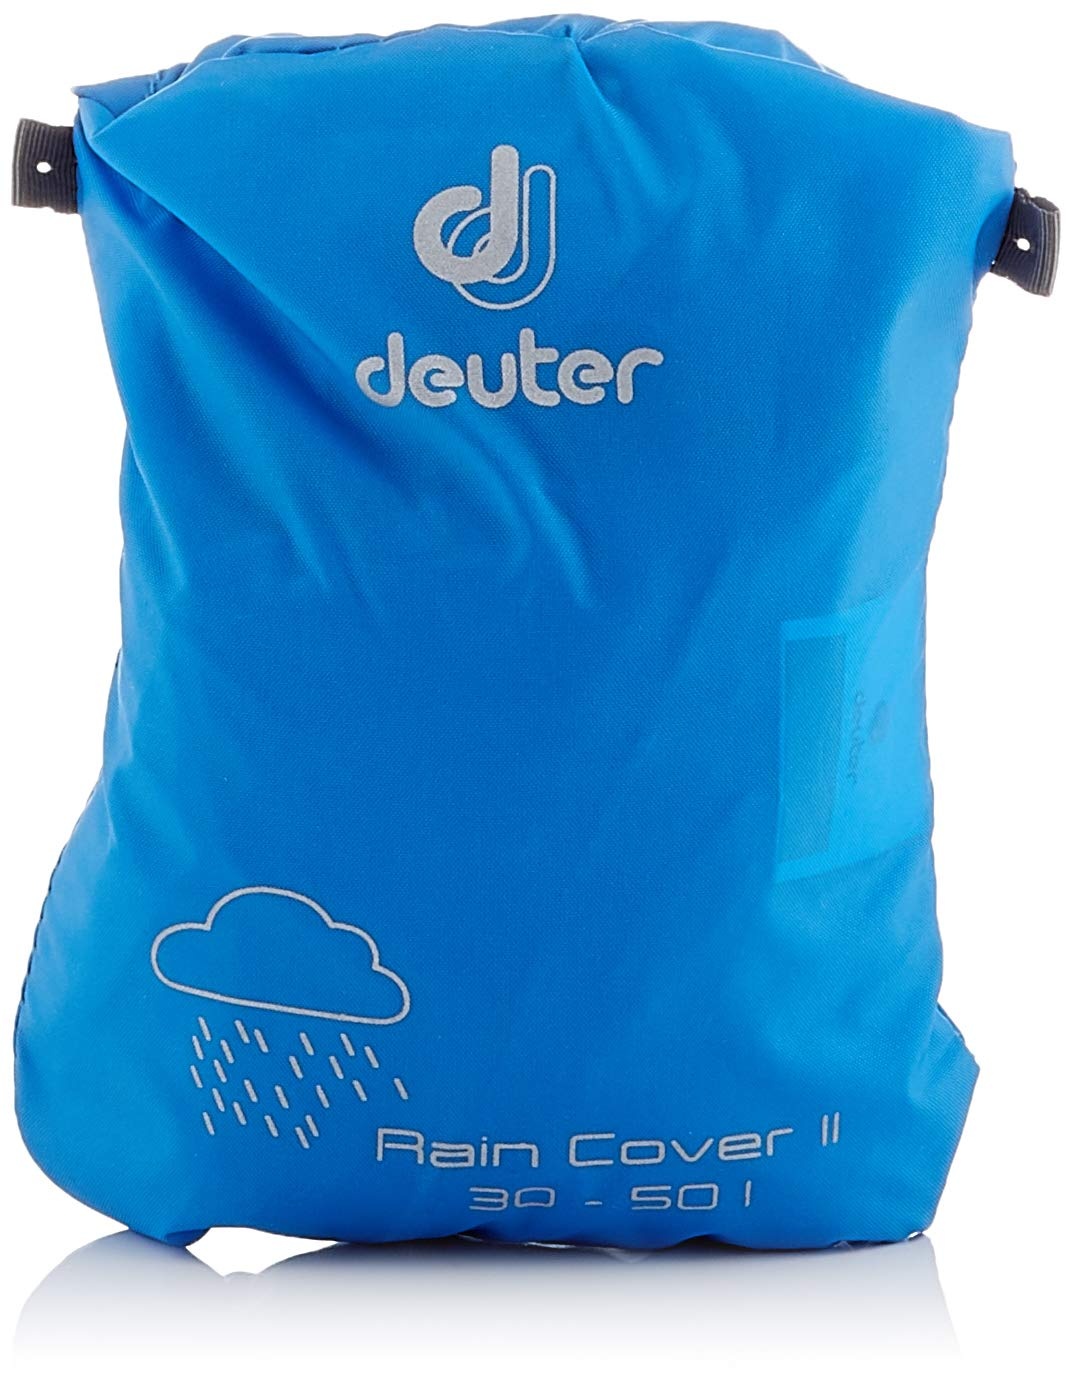 deuter rain cover ii